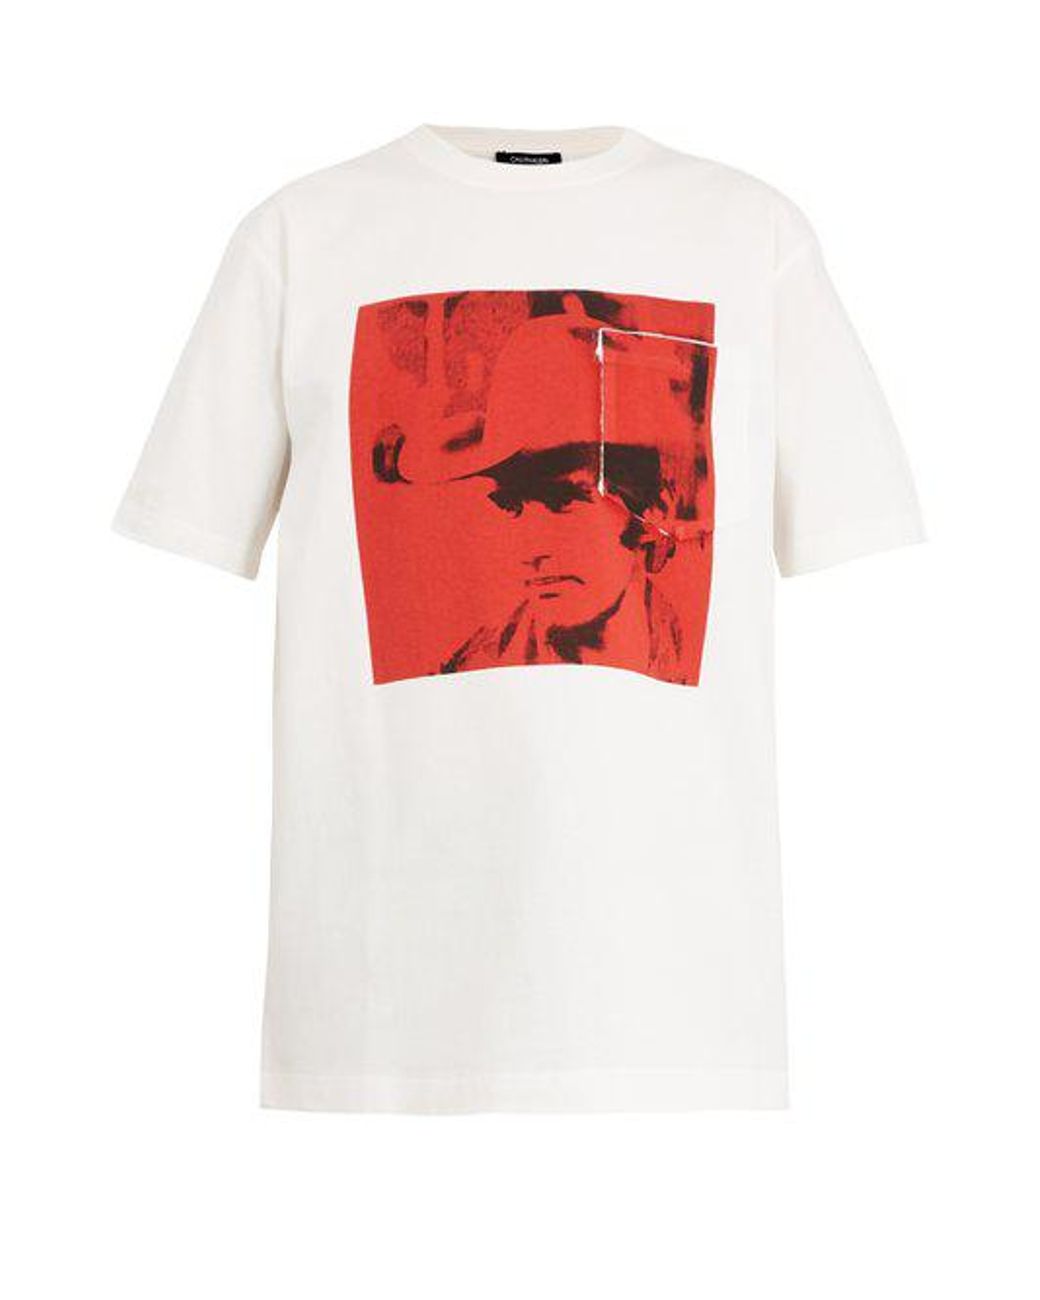 CALVIN KLEIN 205W39NYC Dennis Hopper-print Cotton-jersey T-shirt in White  for Men | Lyst